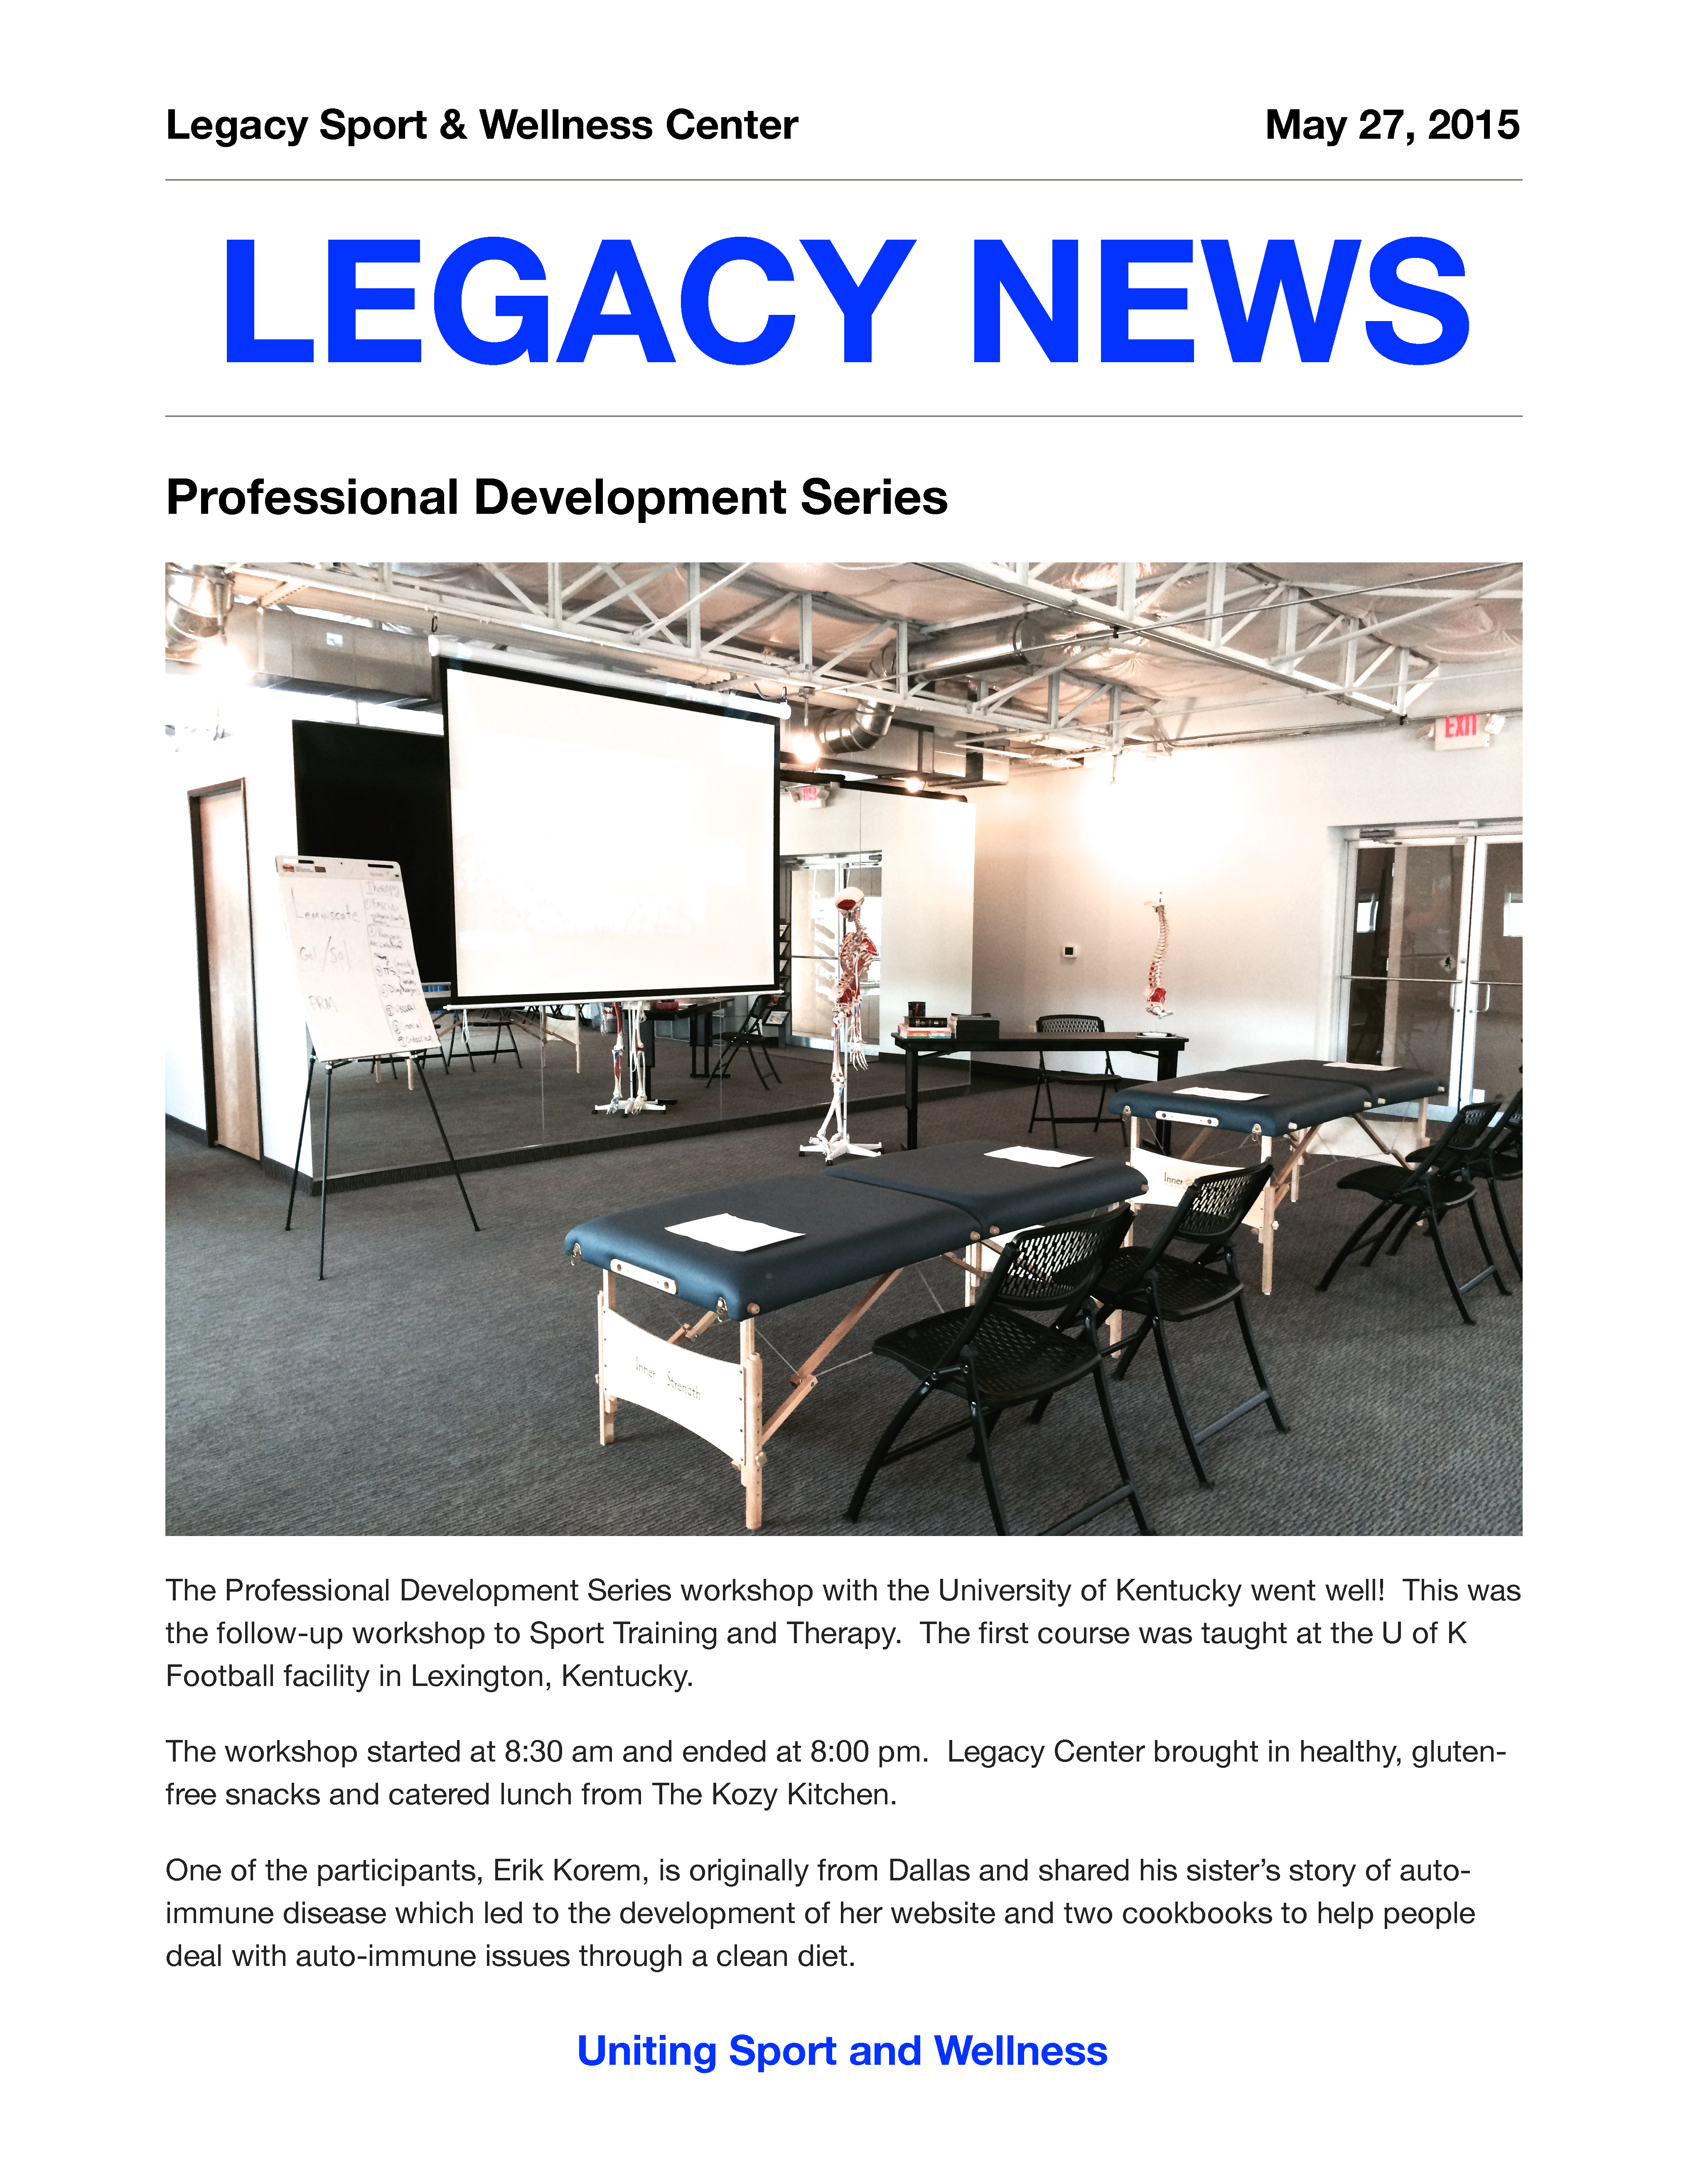 Legacy News 5/27/2015